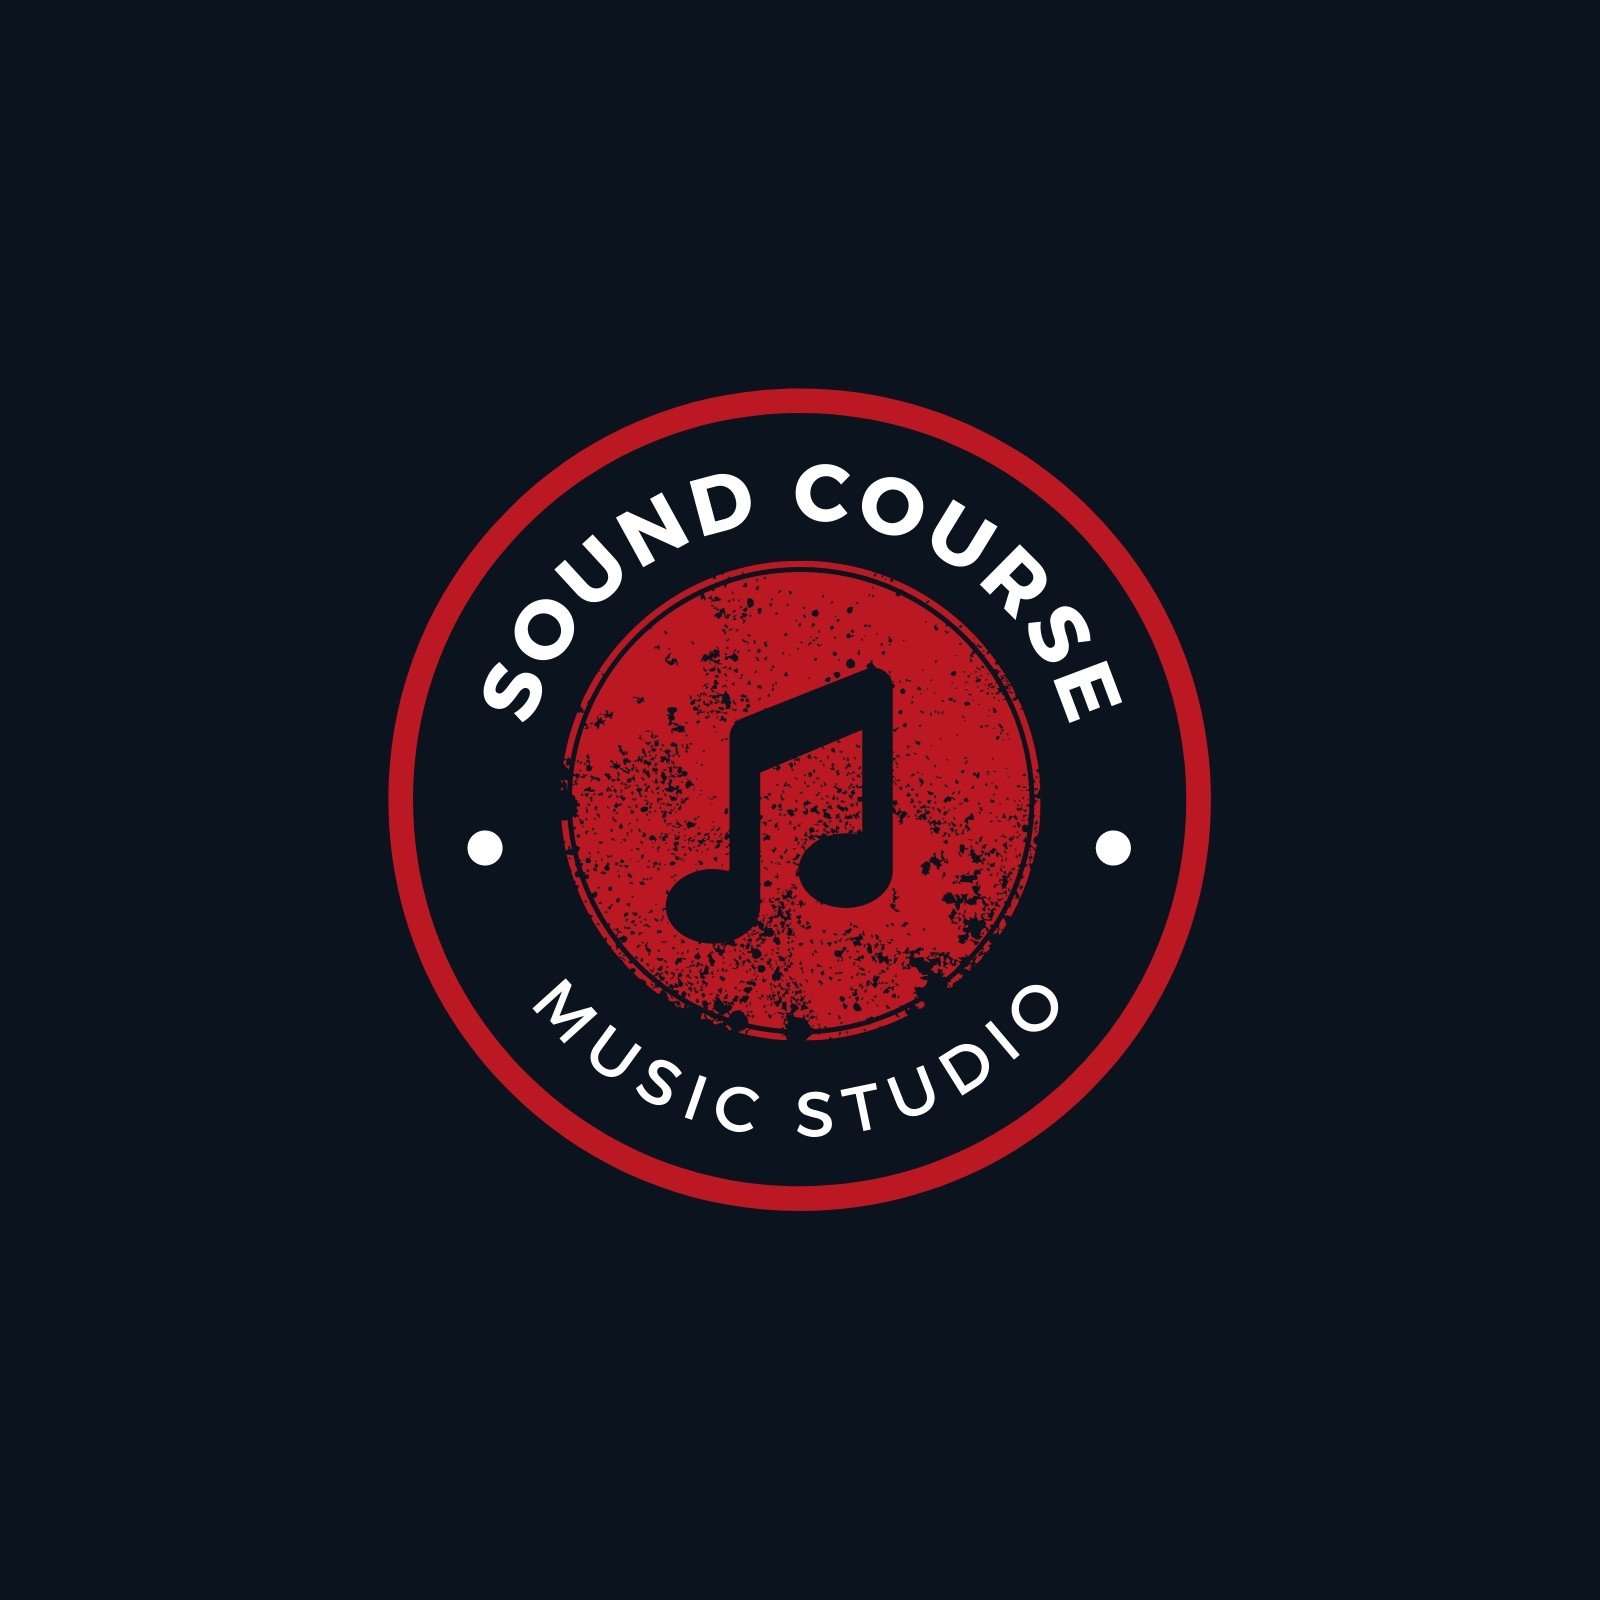 music studio logos